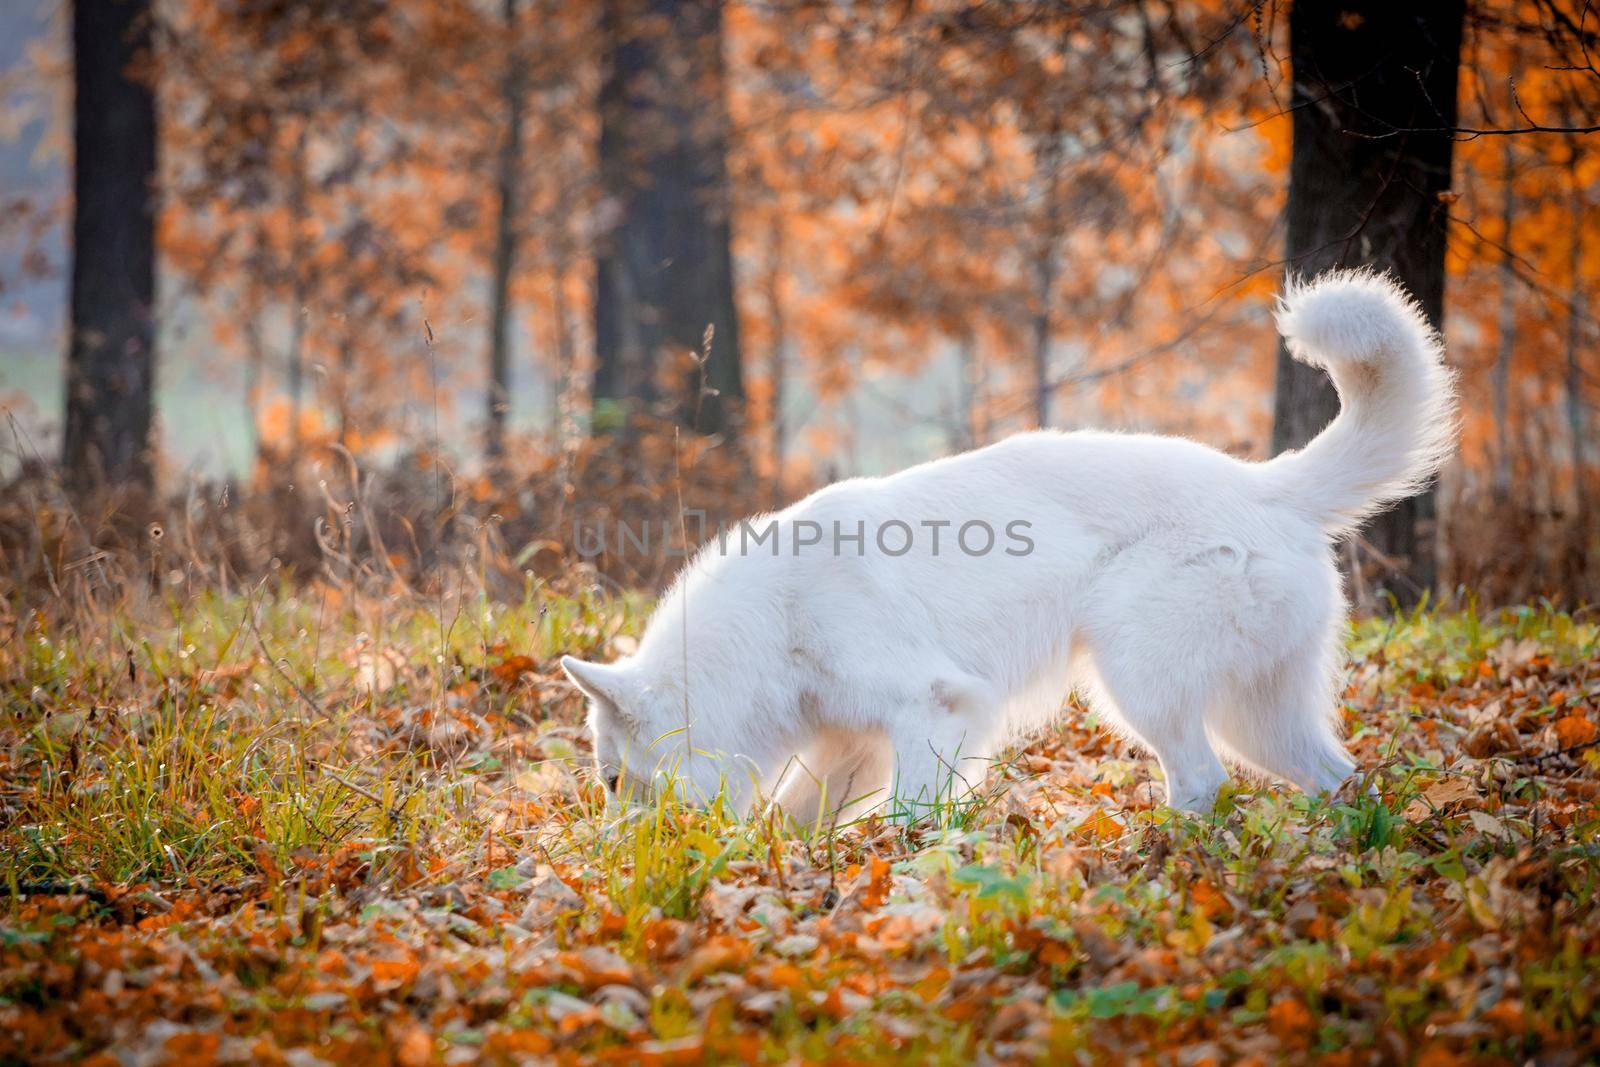 Amazing white swiss shepherd dog in autumn park